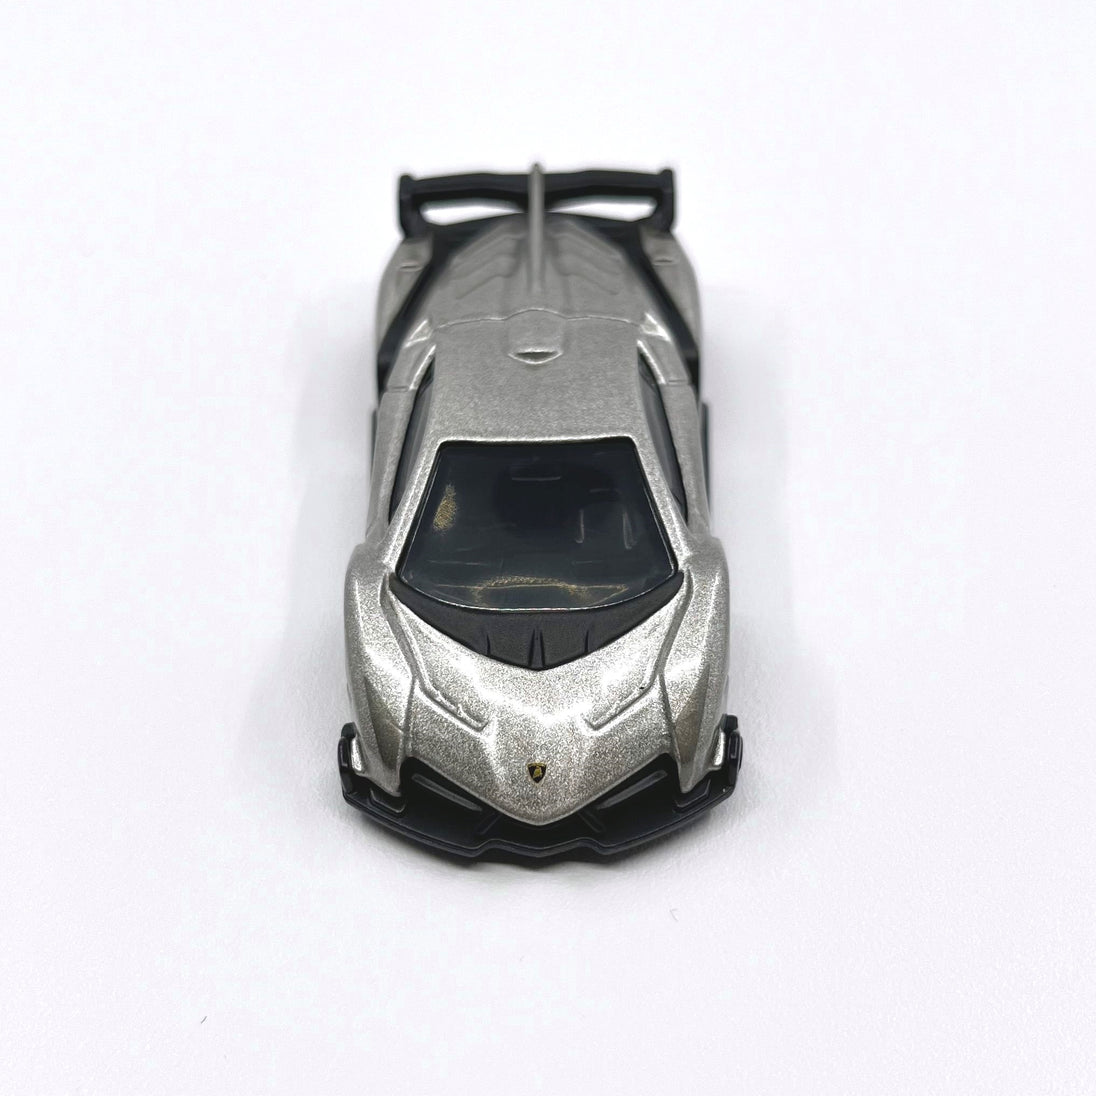 1:67 Lamborghini Veneno Alloy Tomica Diecast Car Model by Takara Tomy